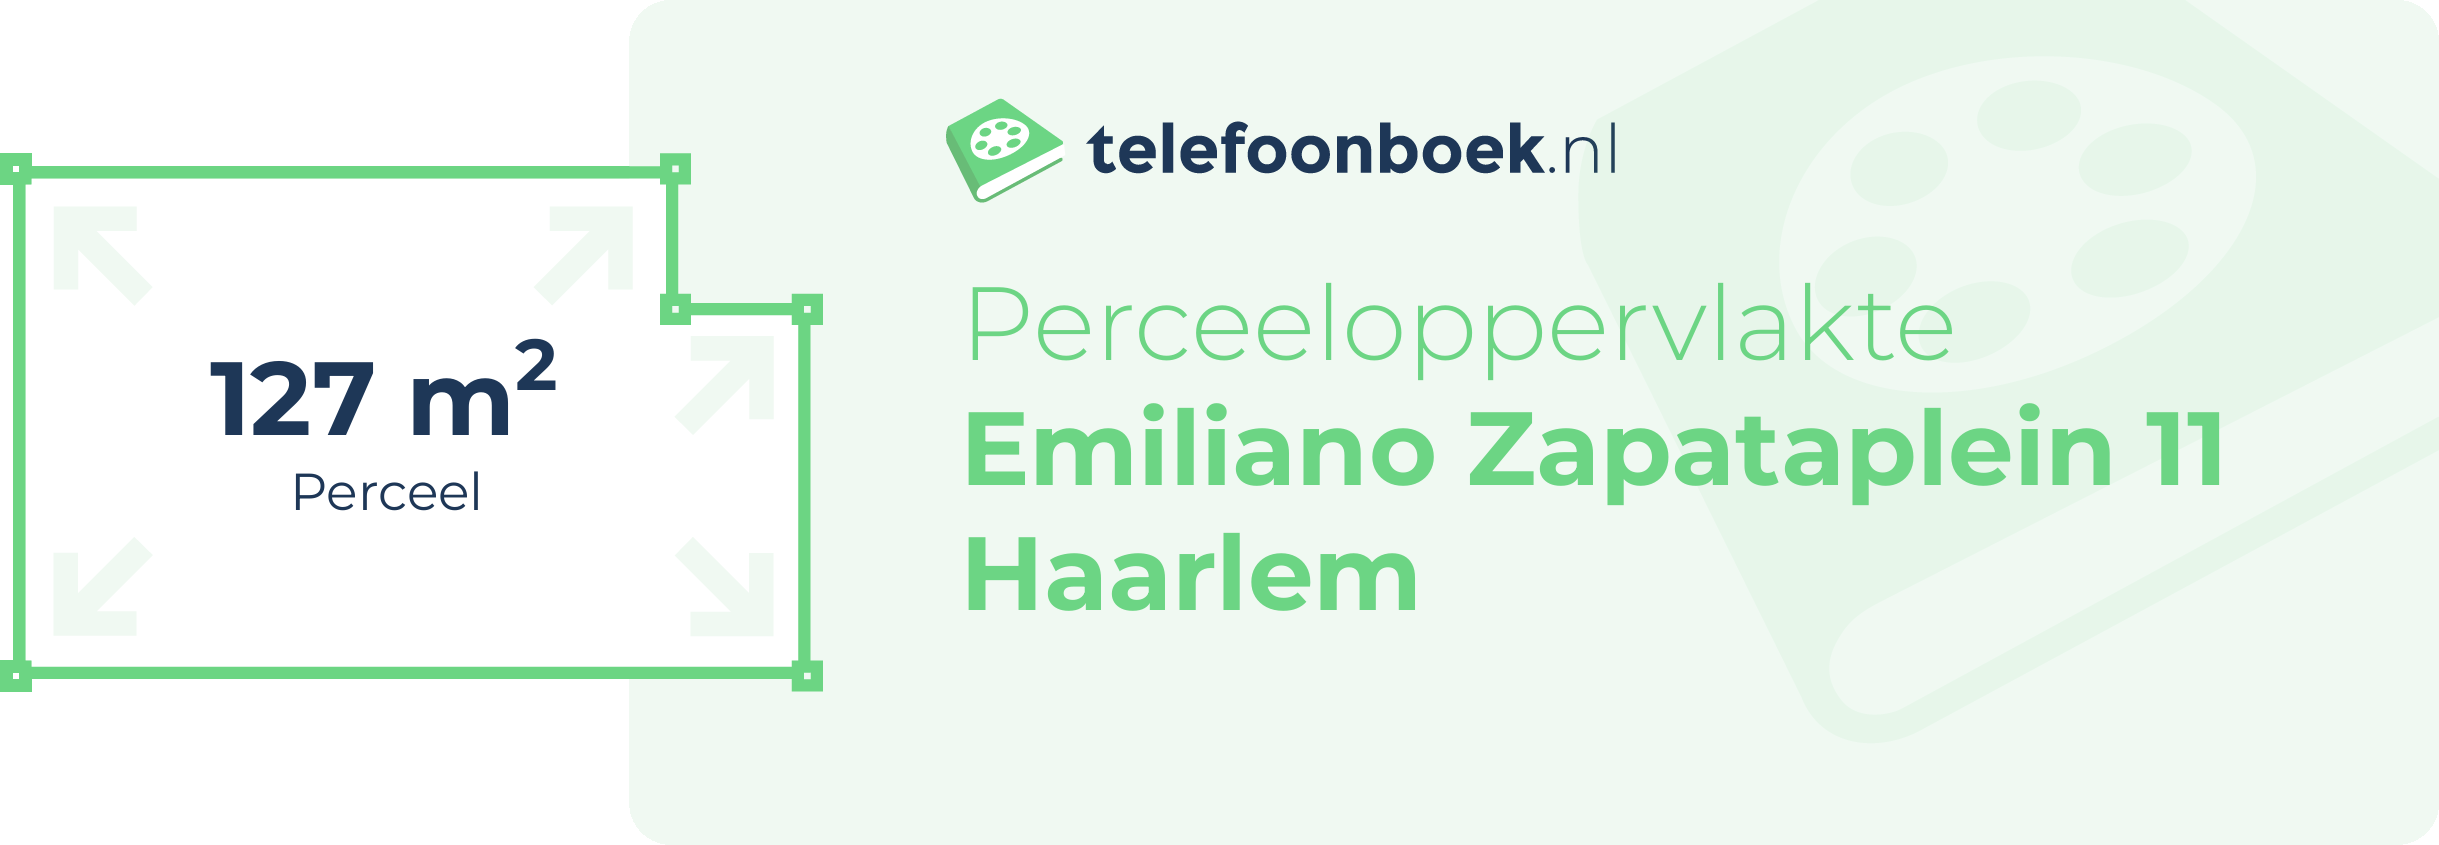 Perceeloppervlakte Emiliano Zapataplein 11 Haarlem